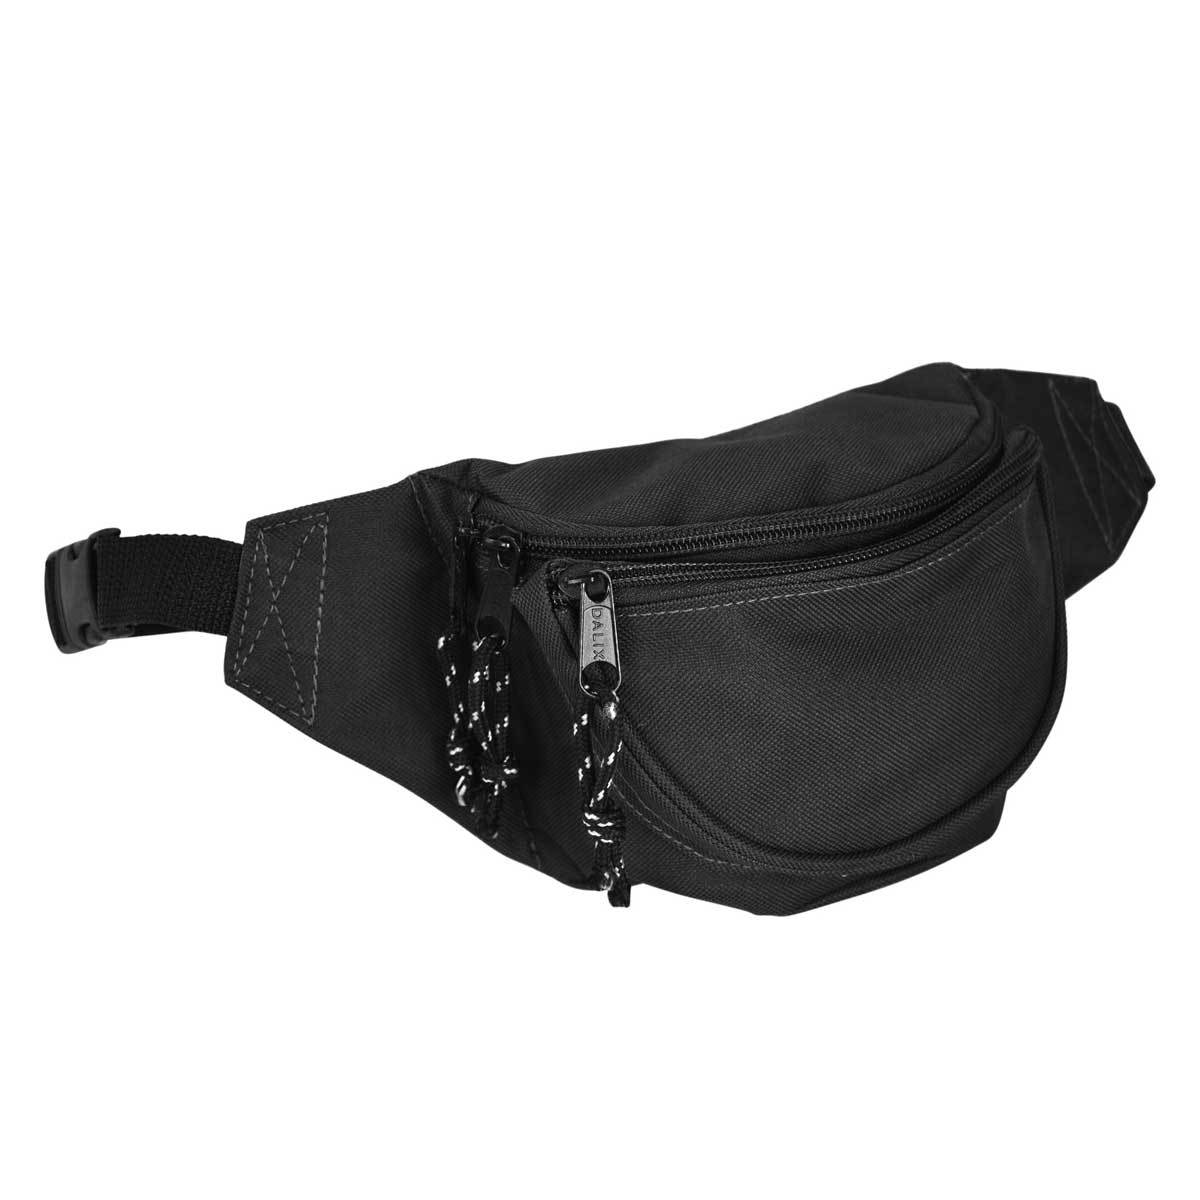 DALIX Fanny Pack w/ 3 Pockets Traveling Concealment Pouch Airport Money Bag FP-001 Fanny Packs DALIX Black 